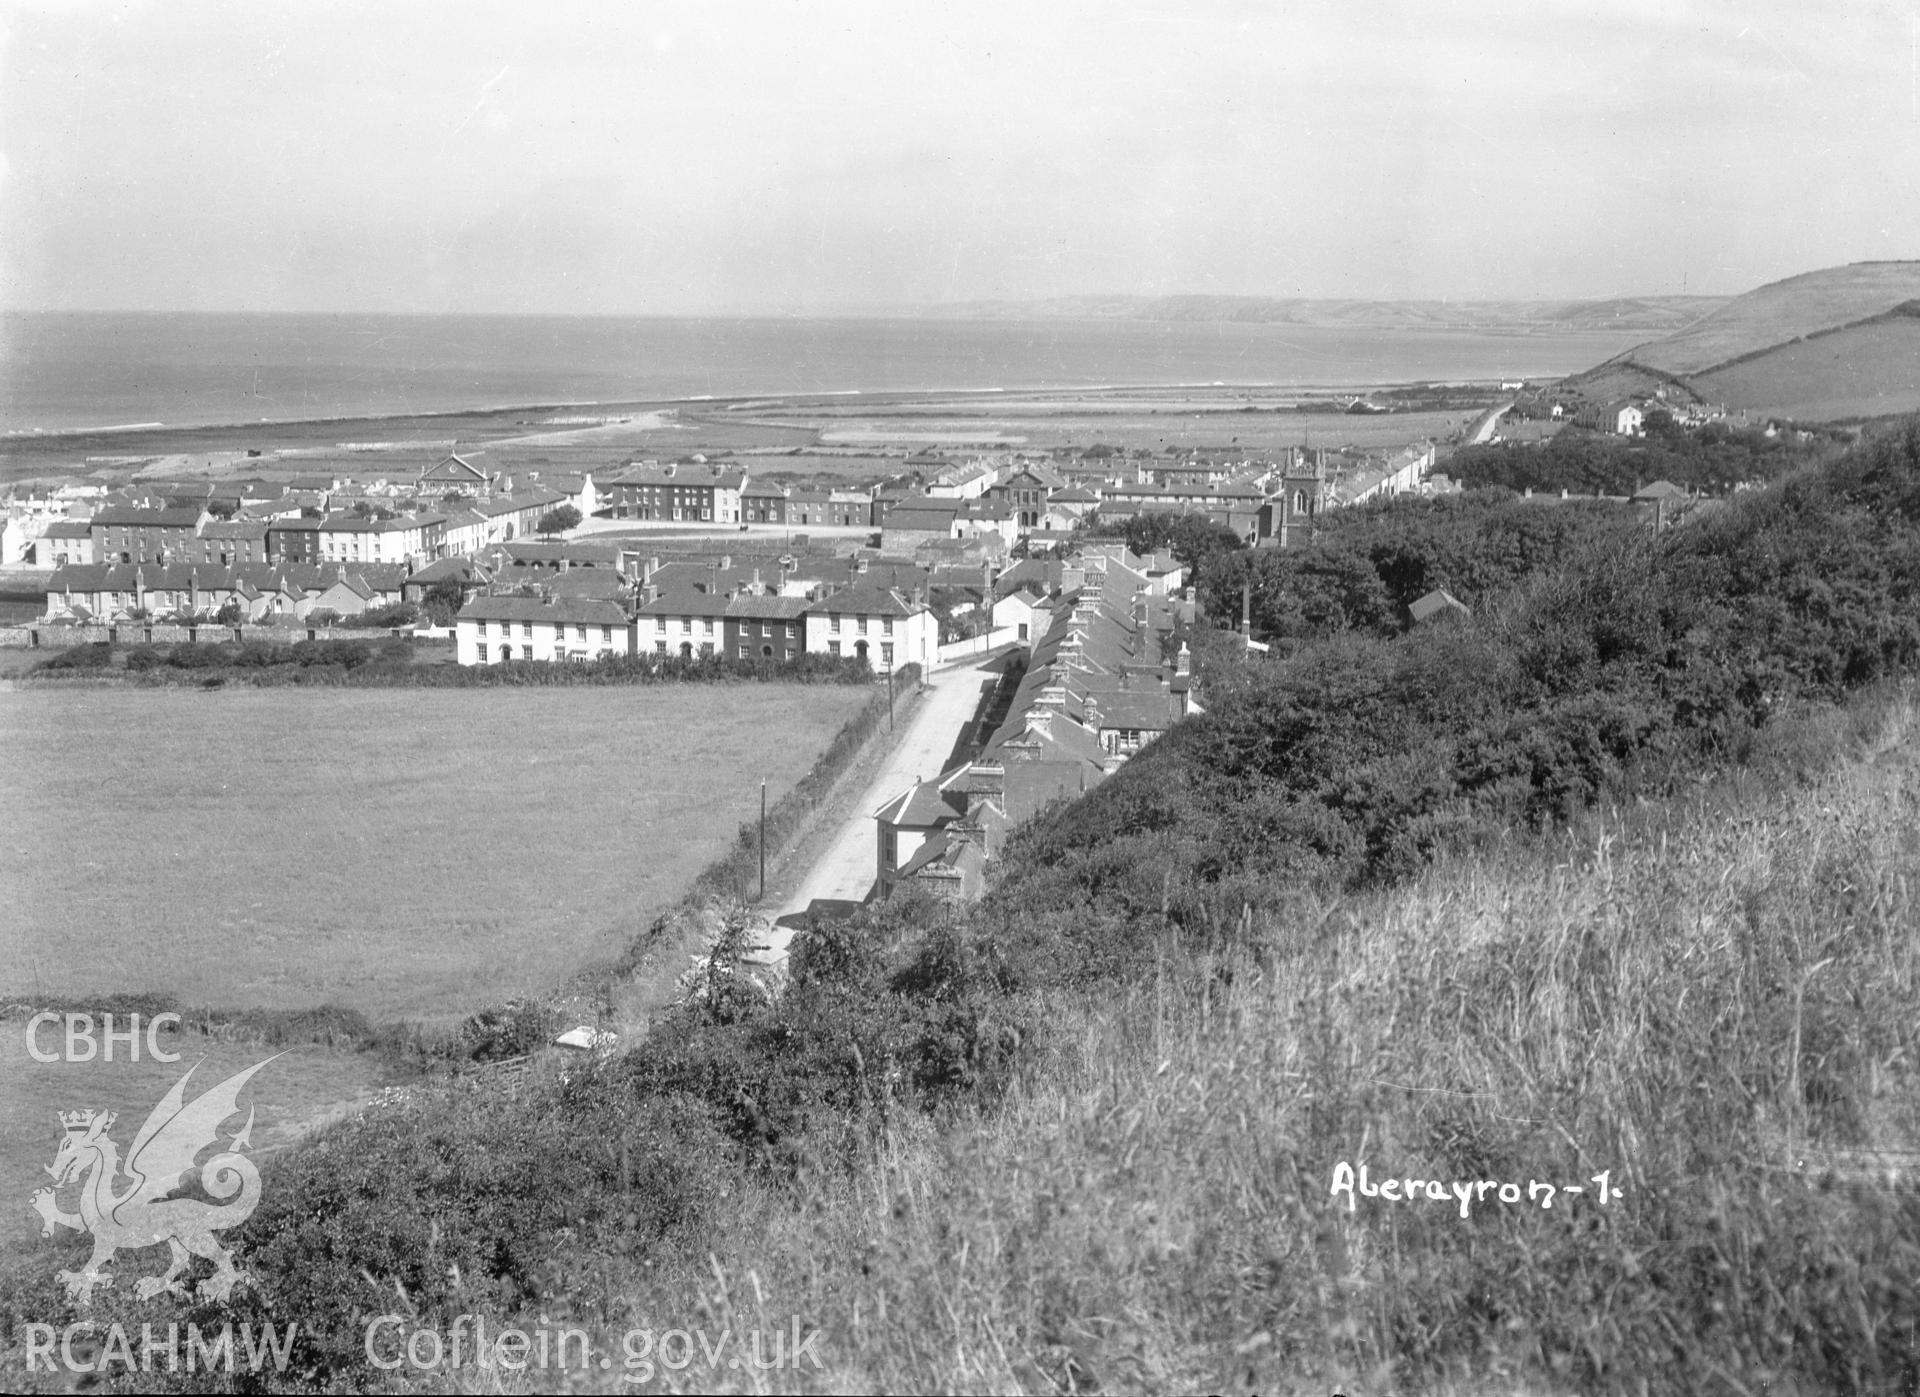 Coastal view of Aberaeron, Cardiganshire  taken by W A Call circa 1920.